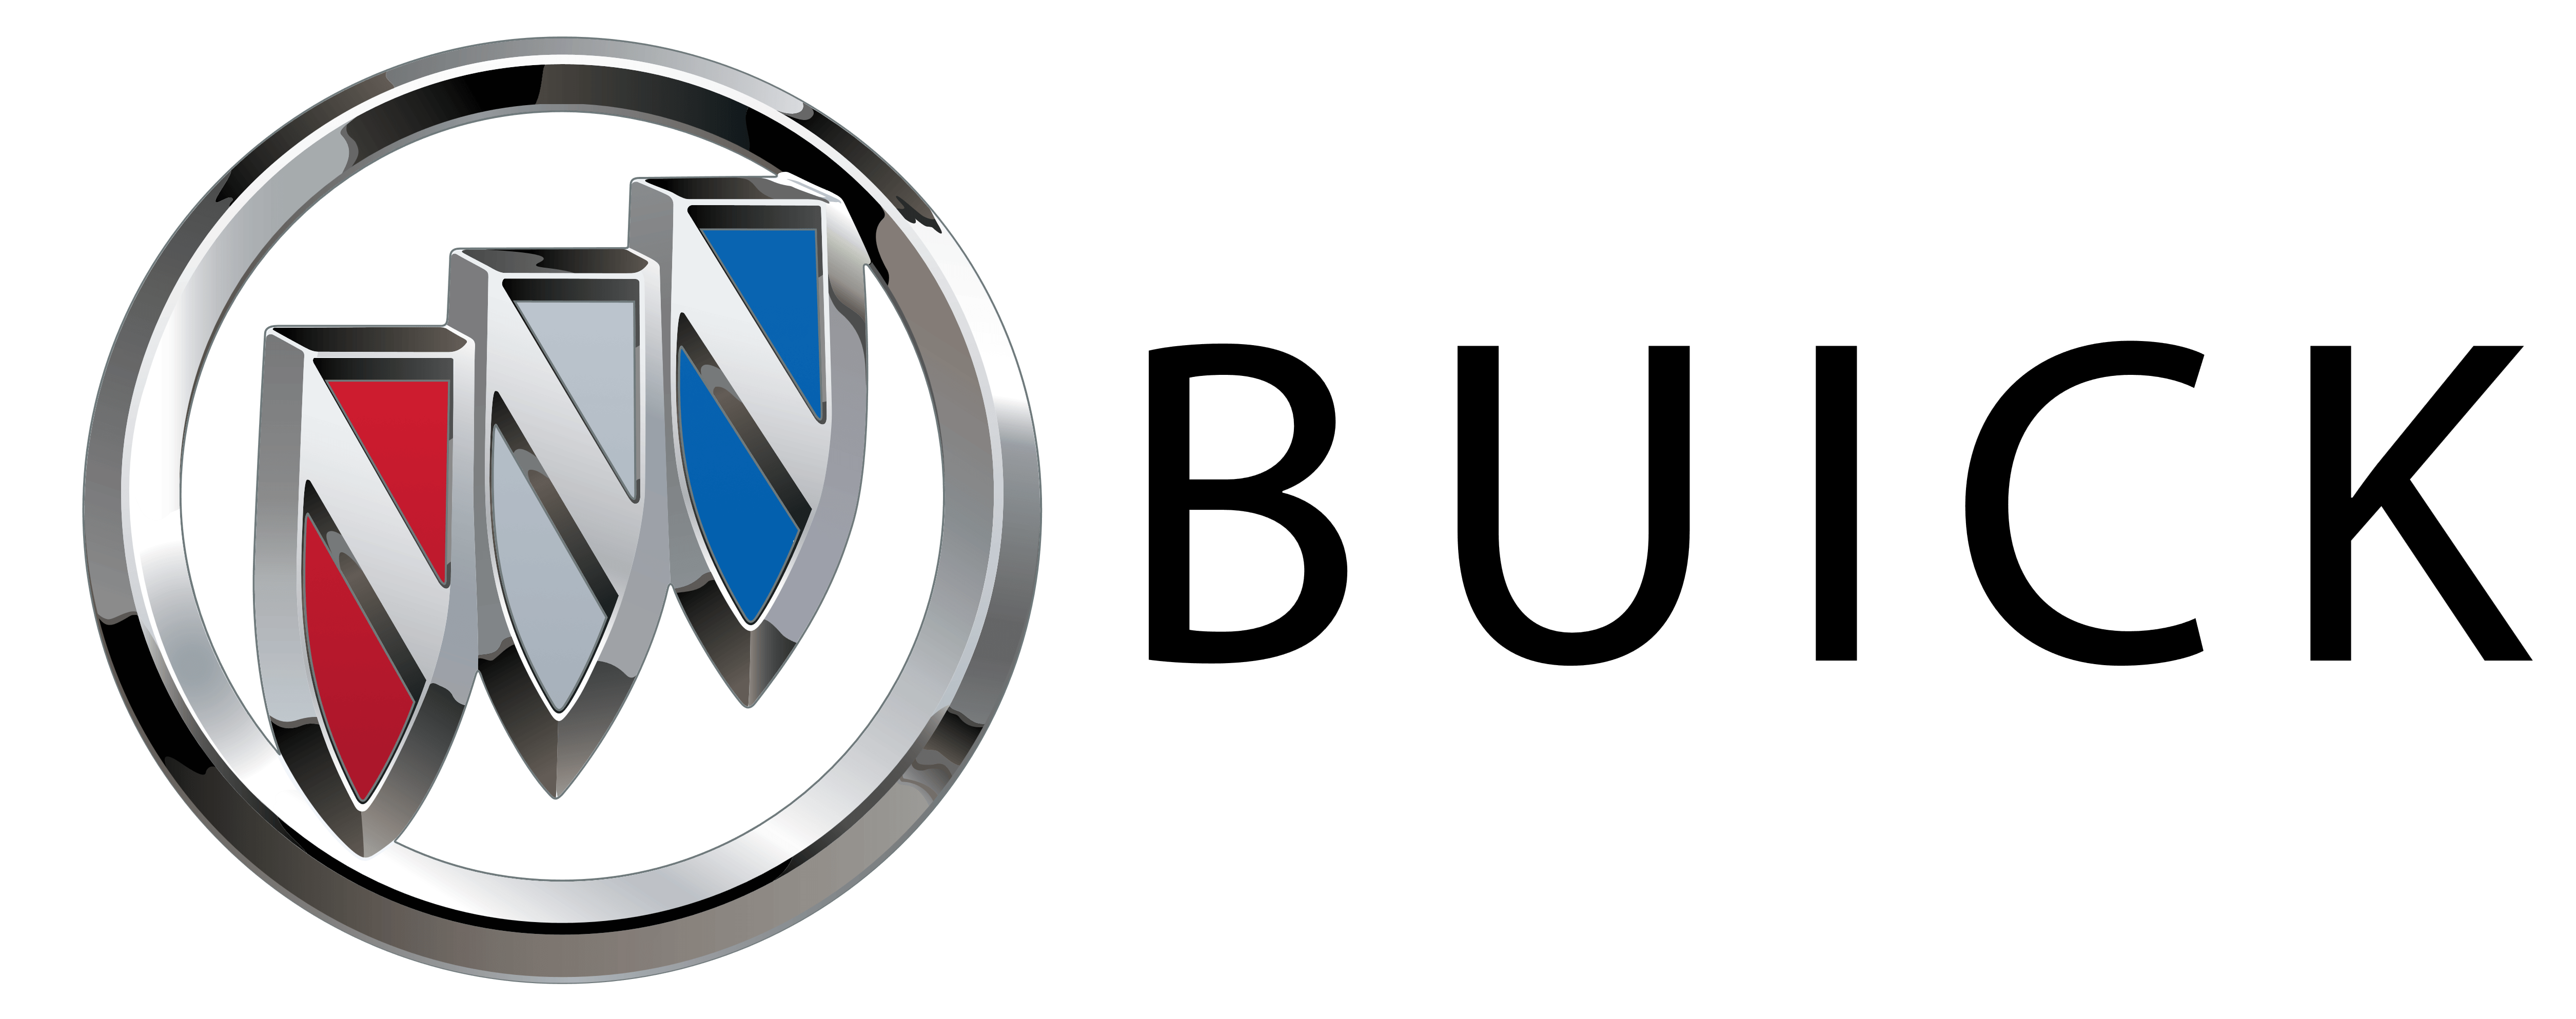 New Buick Logo - Buick – Logos Download